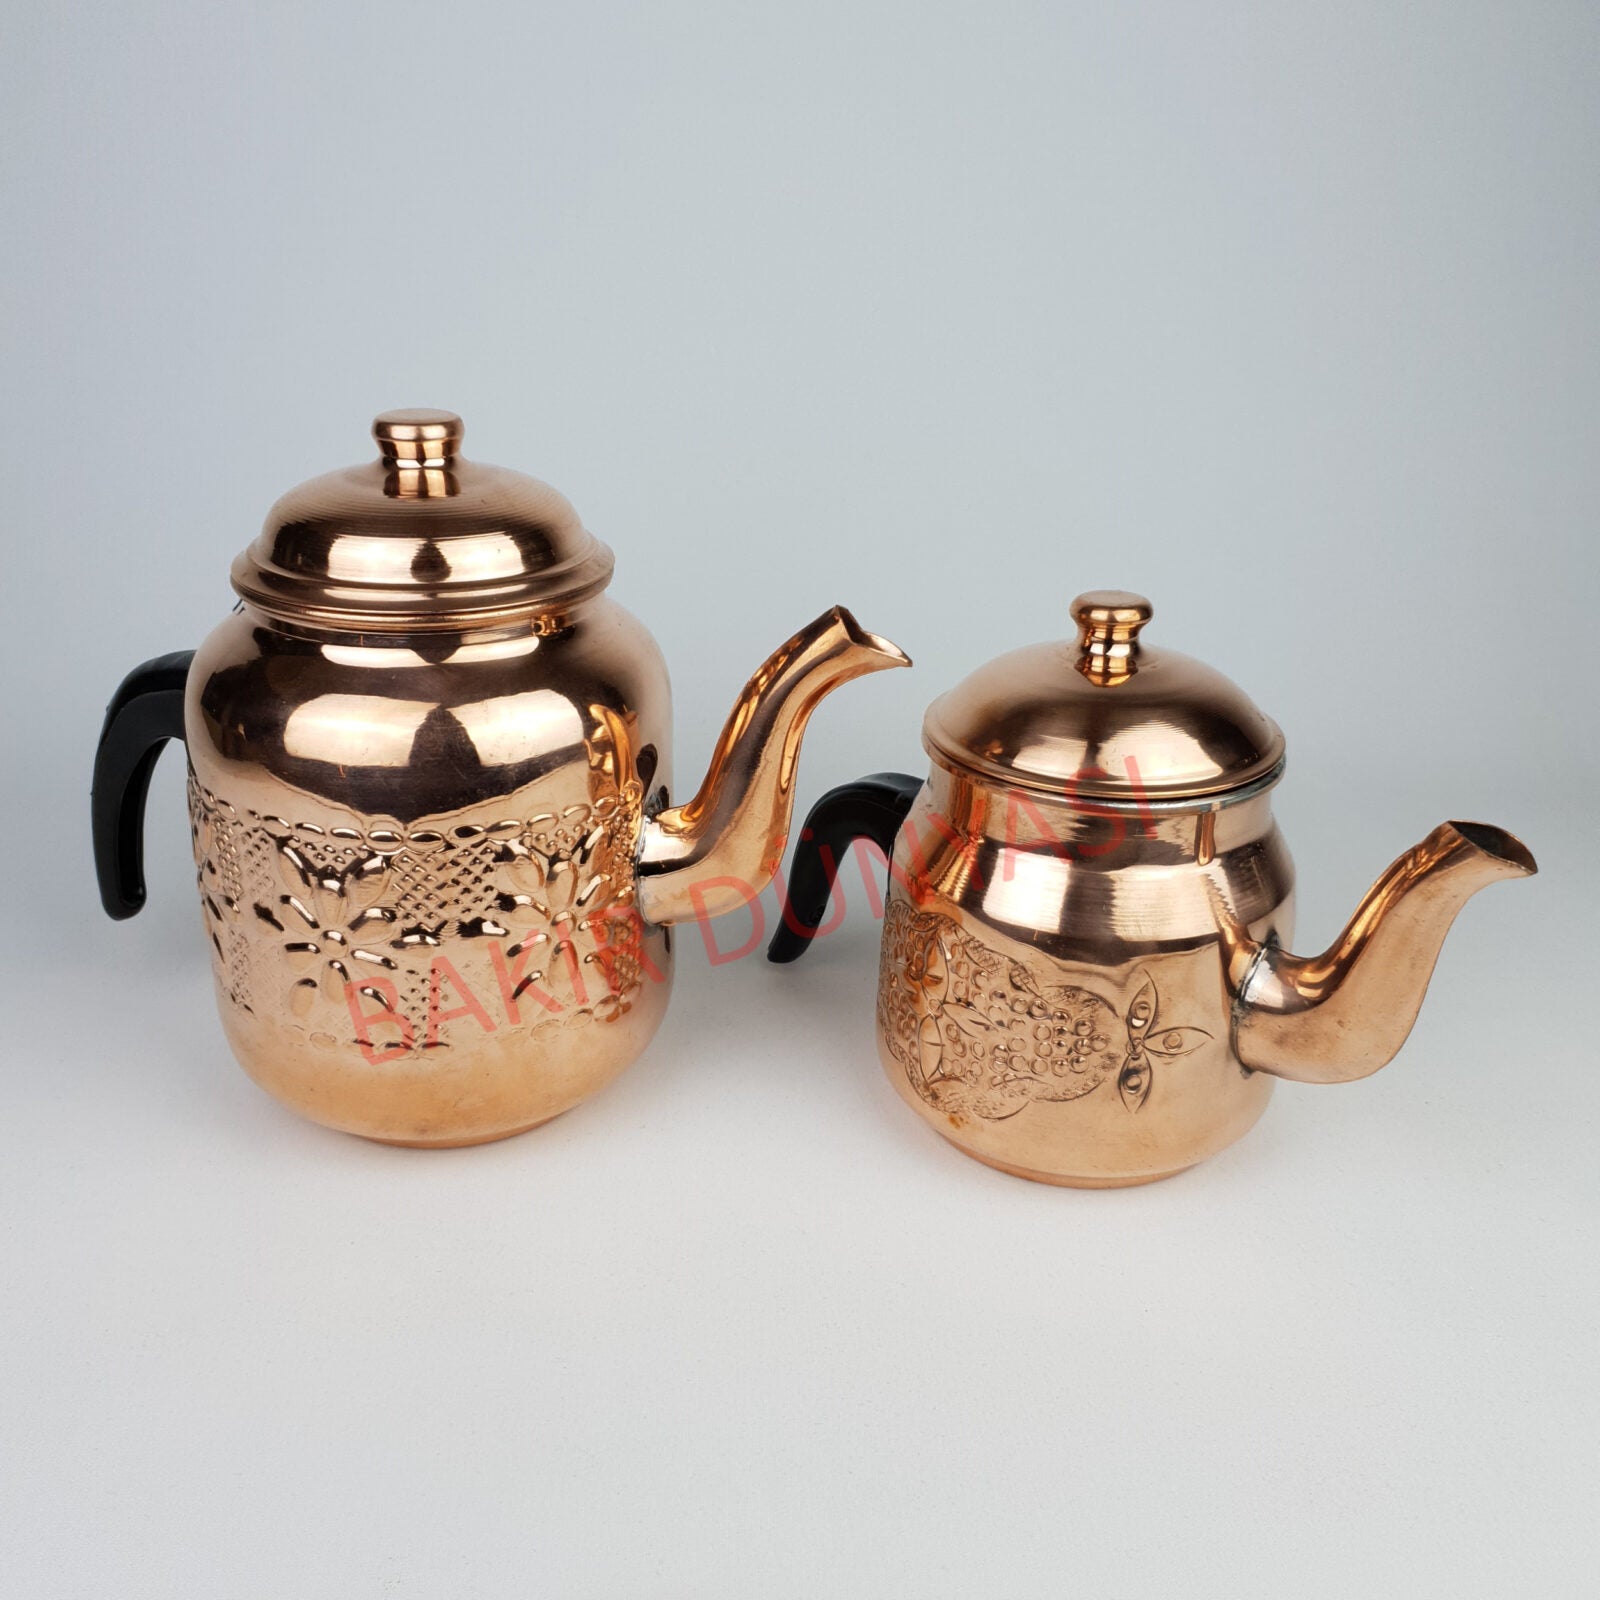 Printed Copper Teapot